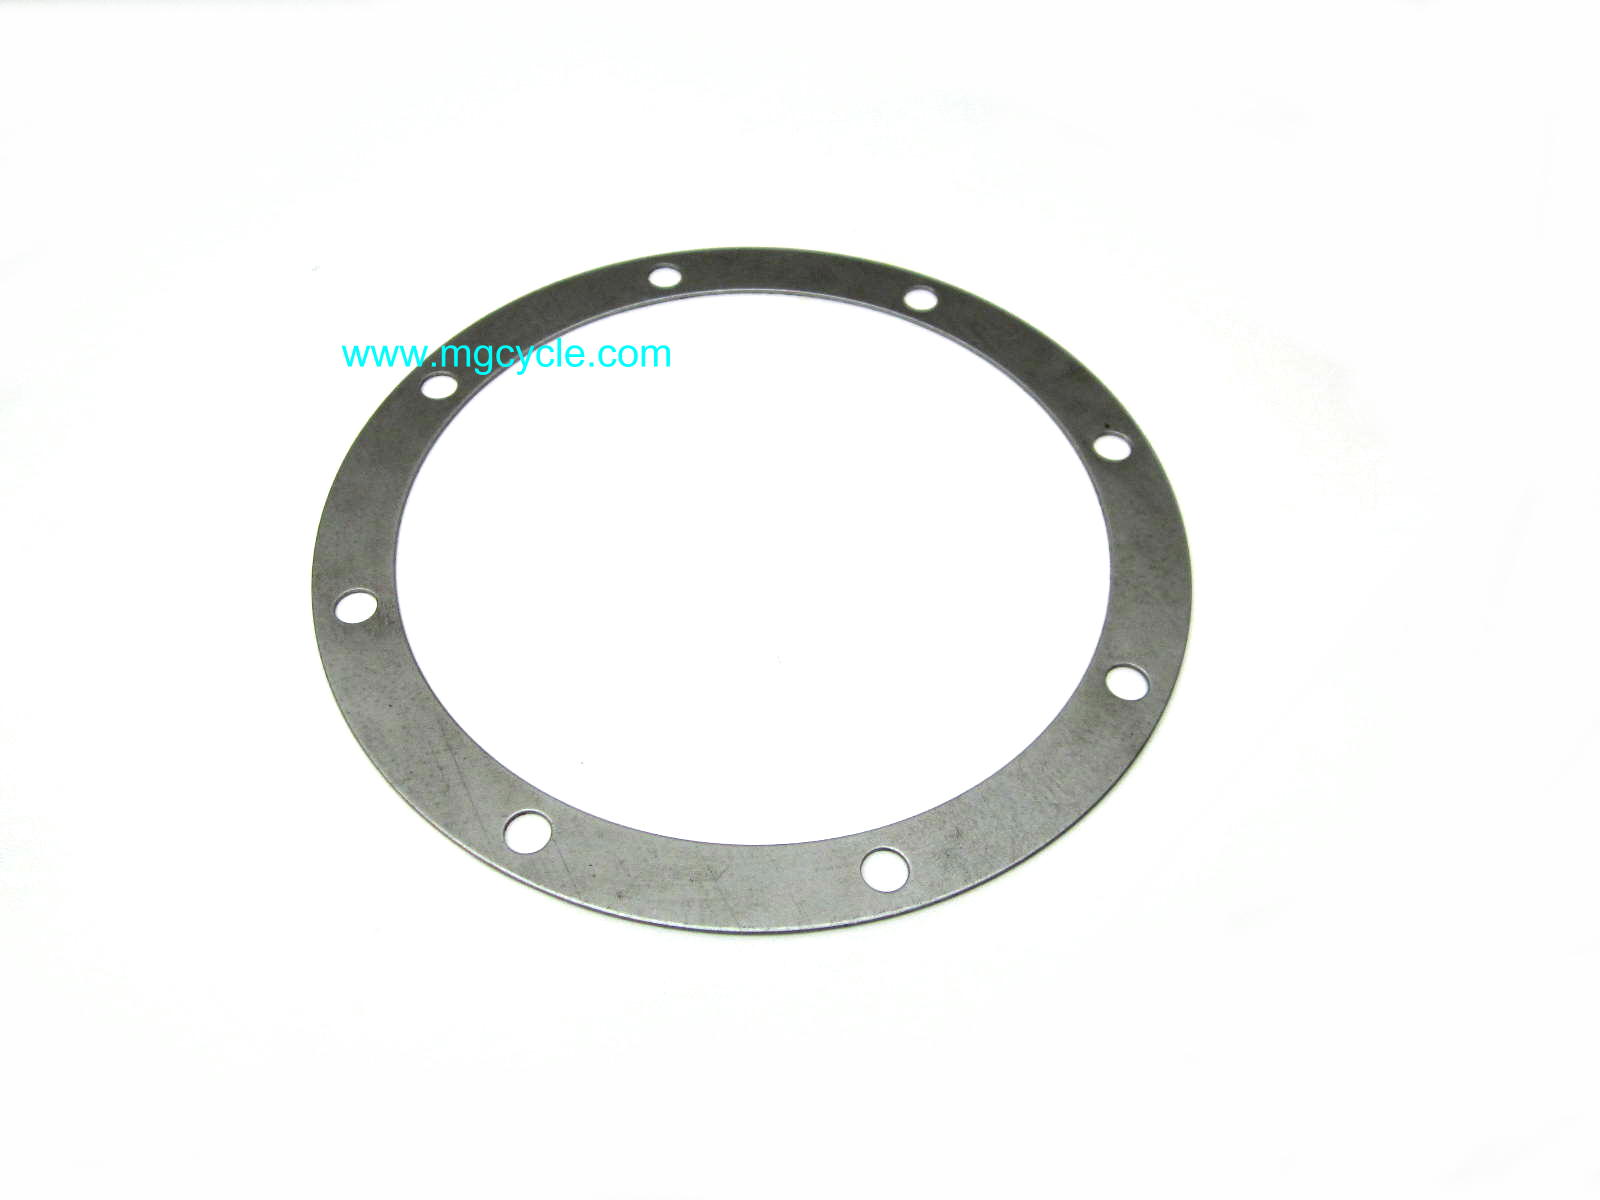 Rear drive box shim, large, 1.0 mm Disc brake